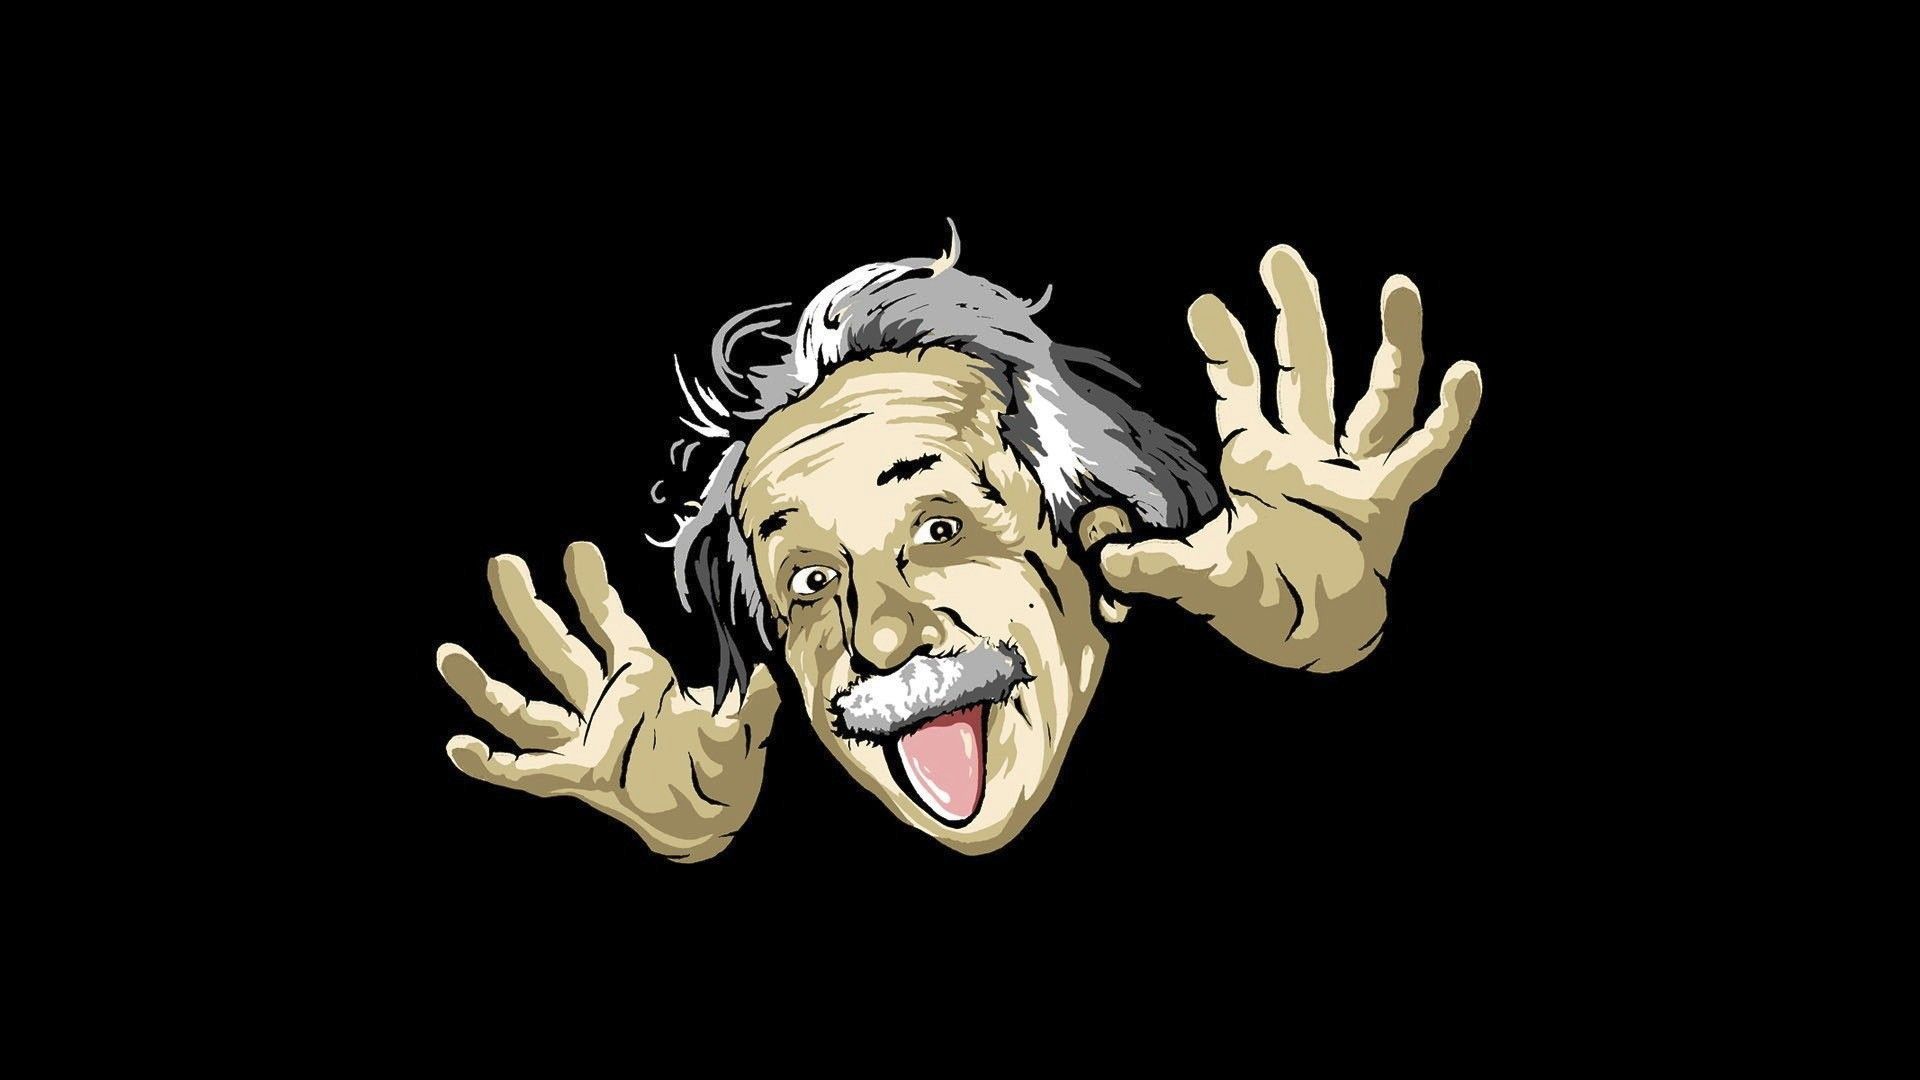 Funny Face Cover Cartoon Albert Einstein Black #3383 Wallpaper ...